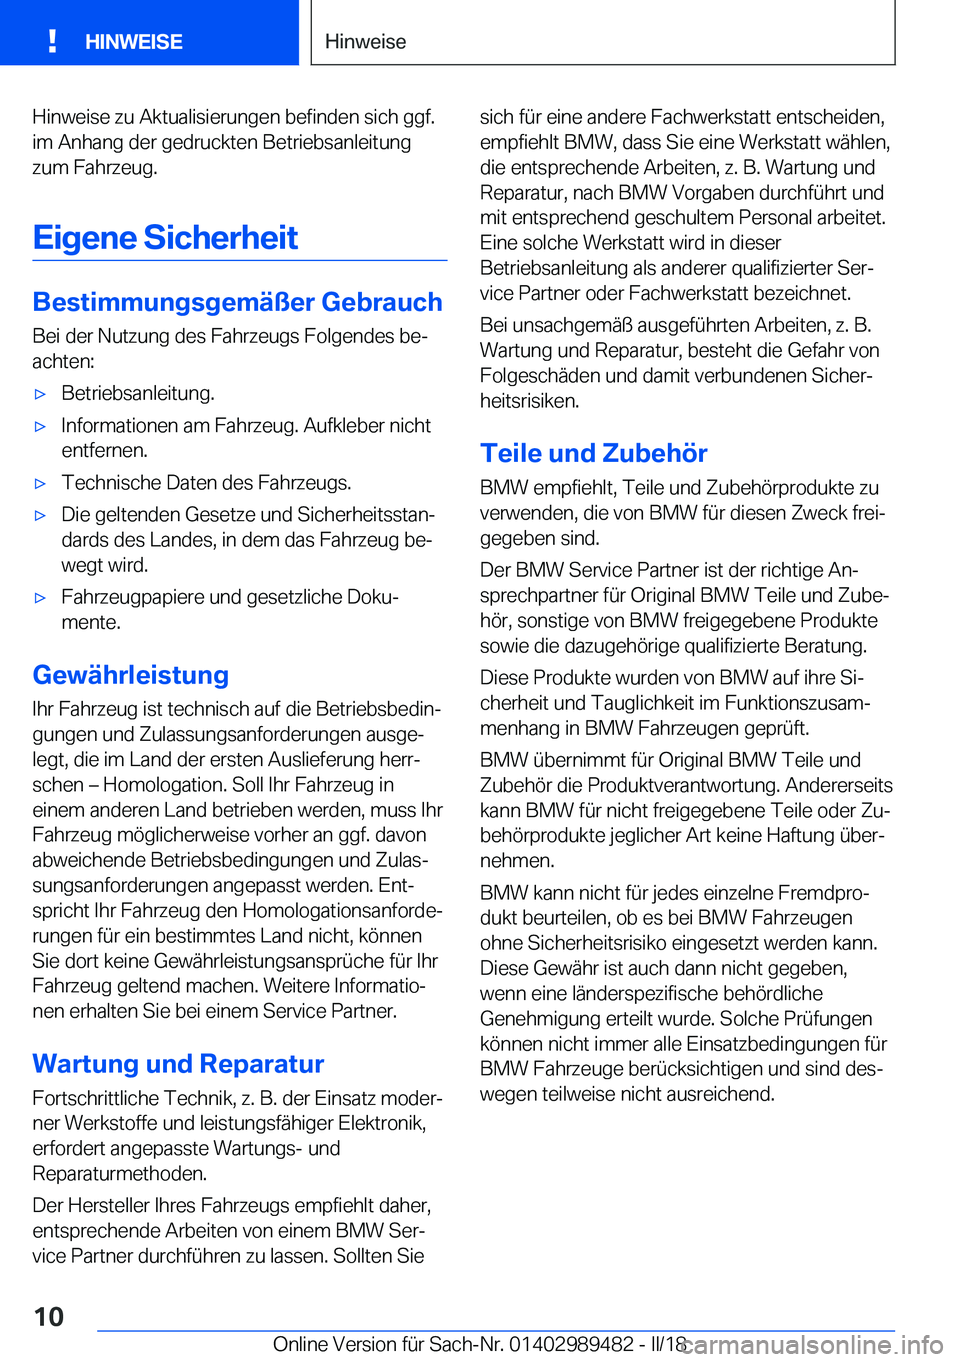 BMW M3 2018  Betriebsanleitungen (in German) �H�i�n�w�e�i�s�e� �z�u� �A�k�t�u�a�l�i�s�i�e�r�u�n�g�e�n� �b�e�f�i�n�d�e�n� �s�i�c�h� �g�g�f�.�i�m� �A�n�h�a�n�g� �d�e�r� �g�e�d�r�u�c�k�t�e�n� �B�e�t�r�i�e�b�s�a�n�l�e�i�t�u�n�g�z�u�m� �F�a�h�r�z�e�u